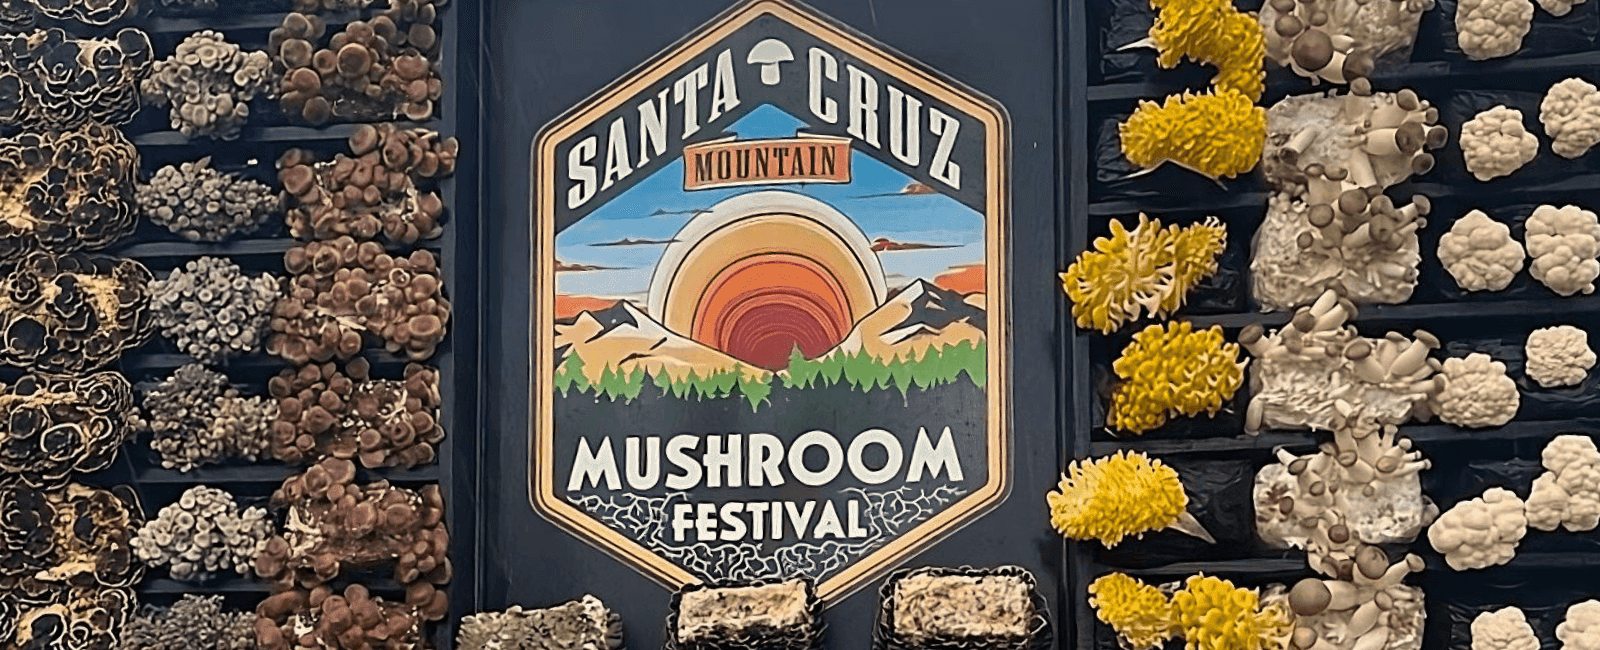 First-Ever Santa Cruz Mountain Mushroom Festival Brings Mushrooms to the Masses in California